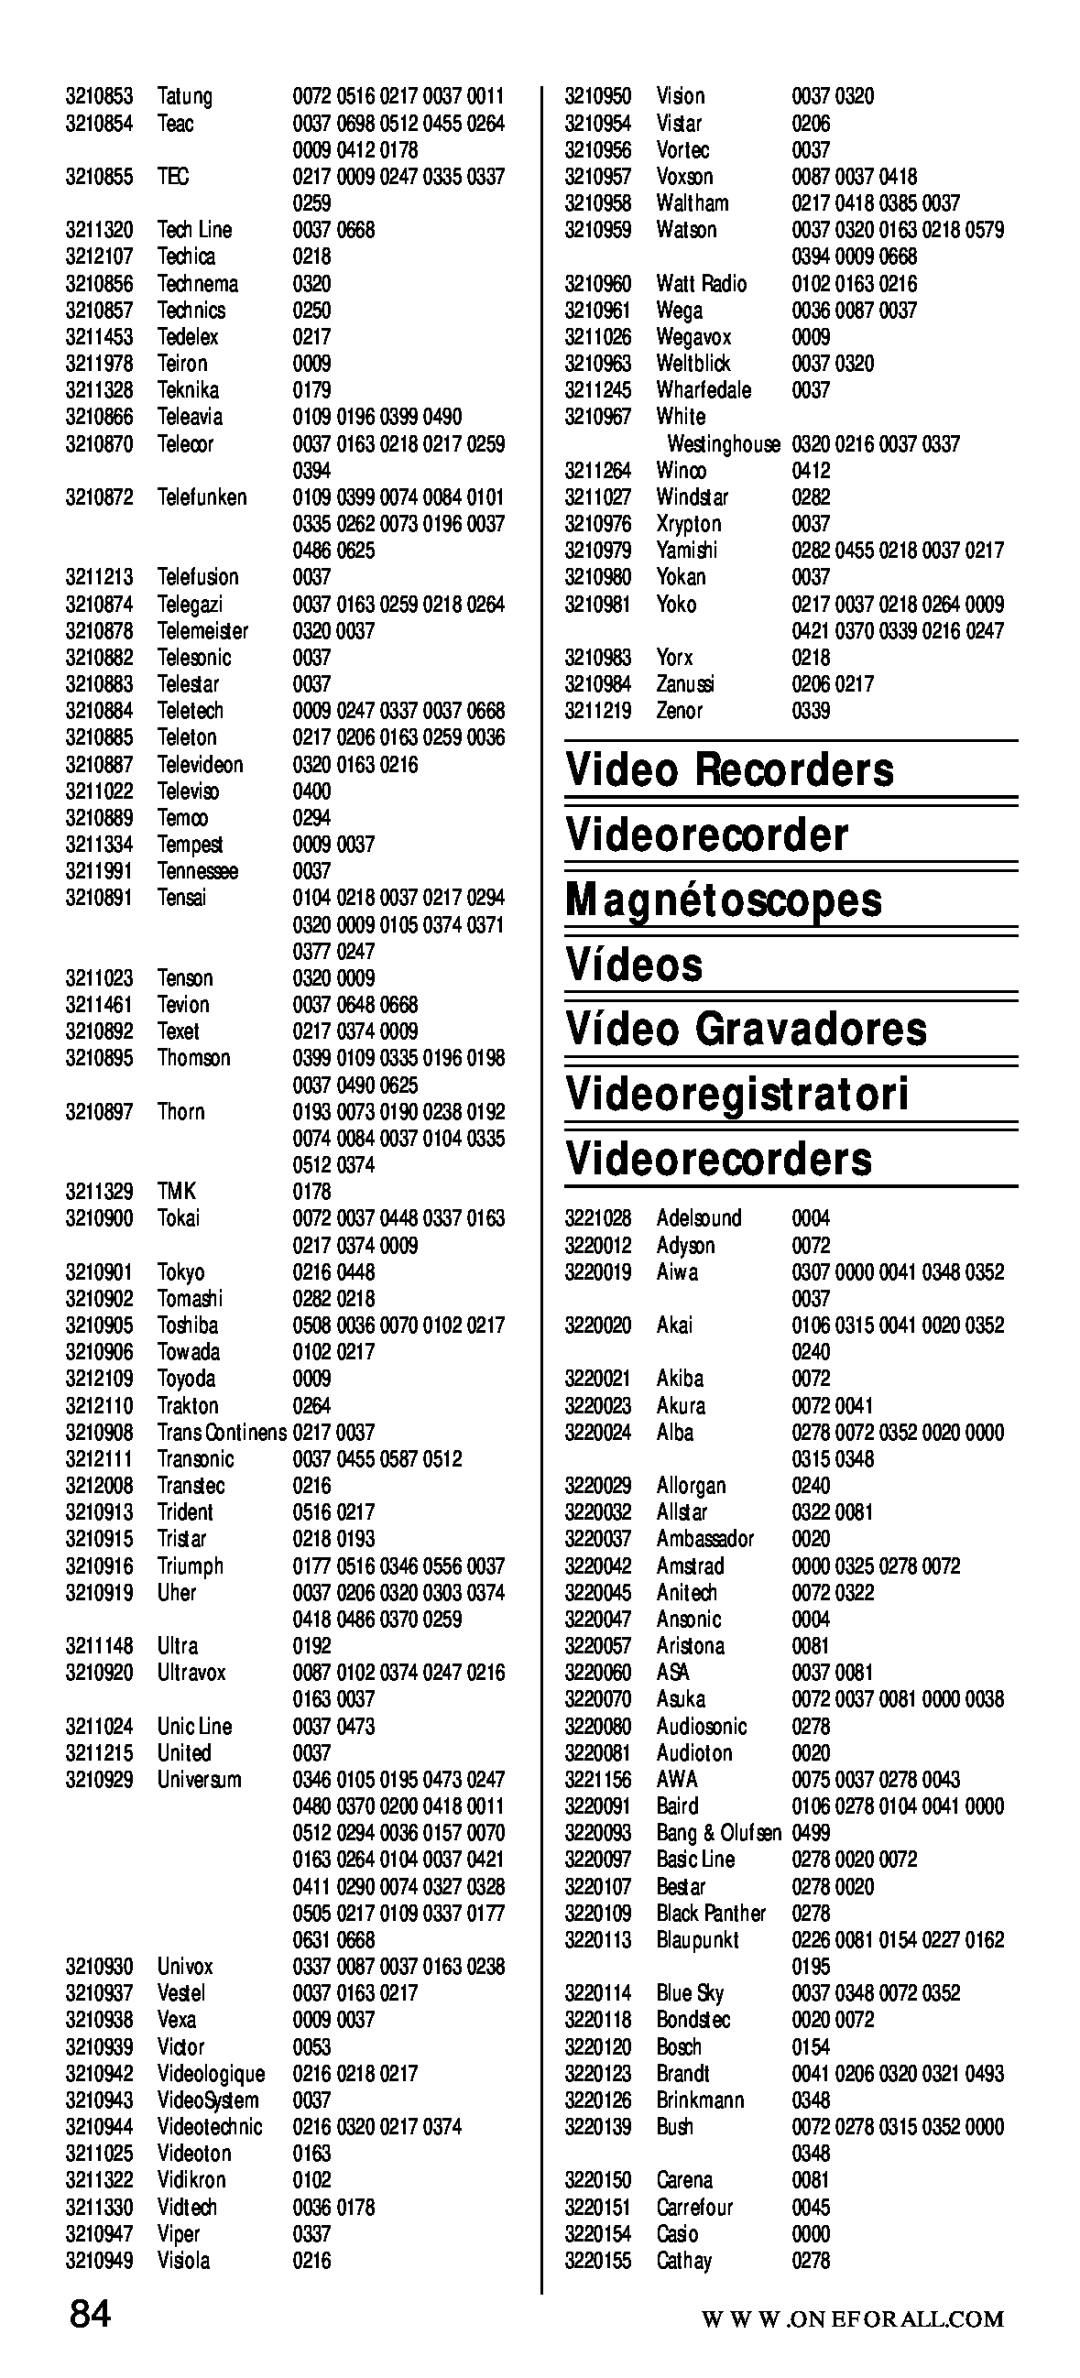 One for All URC-7040 Video Recorders Videorecorder Magnétoscopes Vídeos Vídeo Gravadores, Videoregistratori Videorecorders 